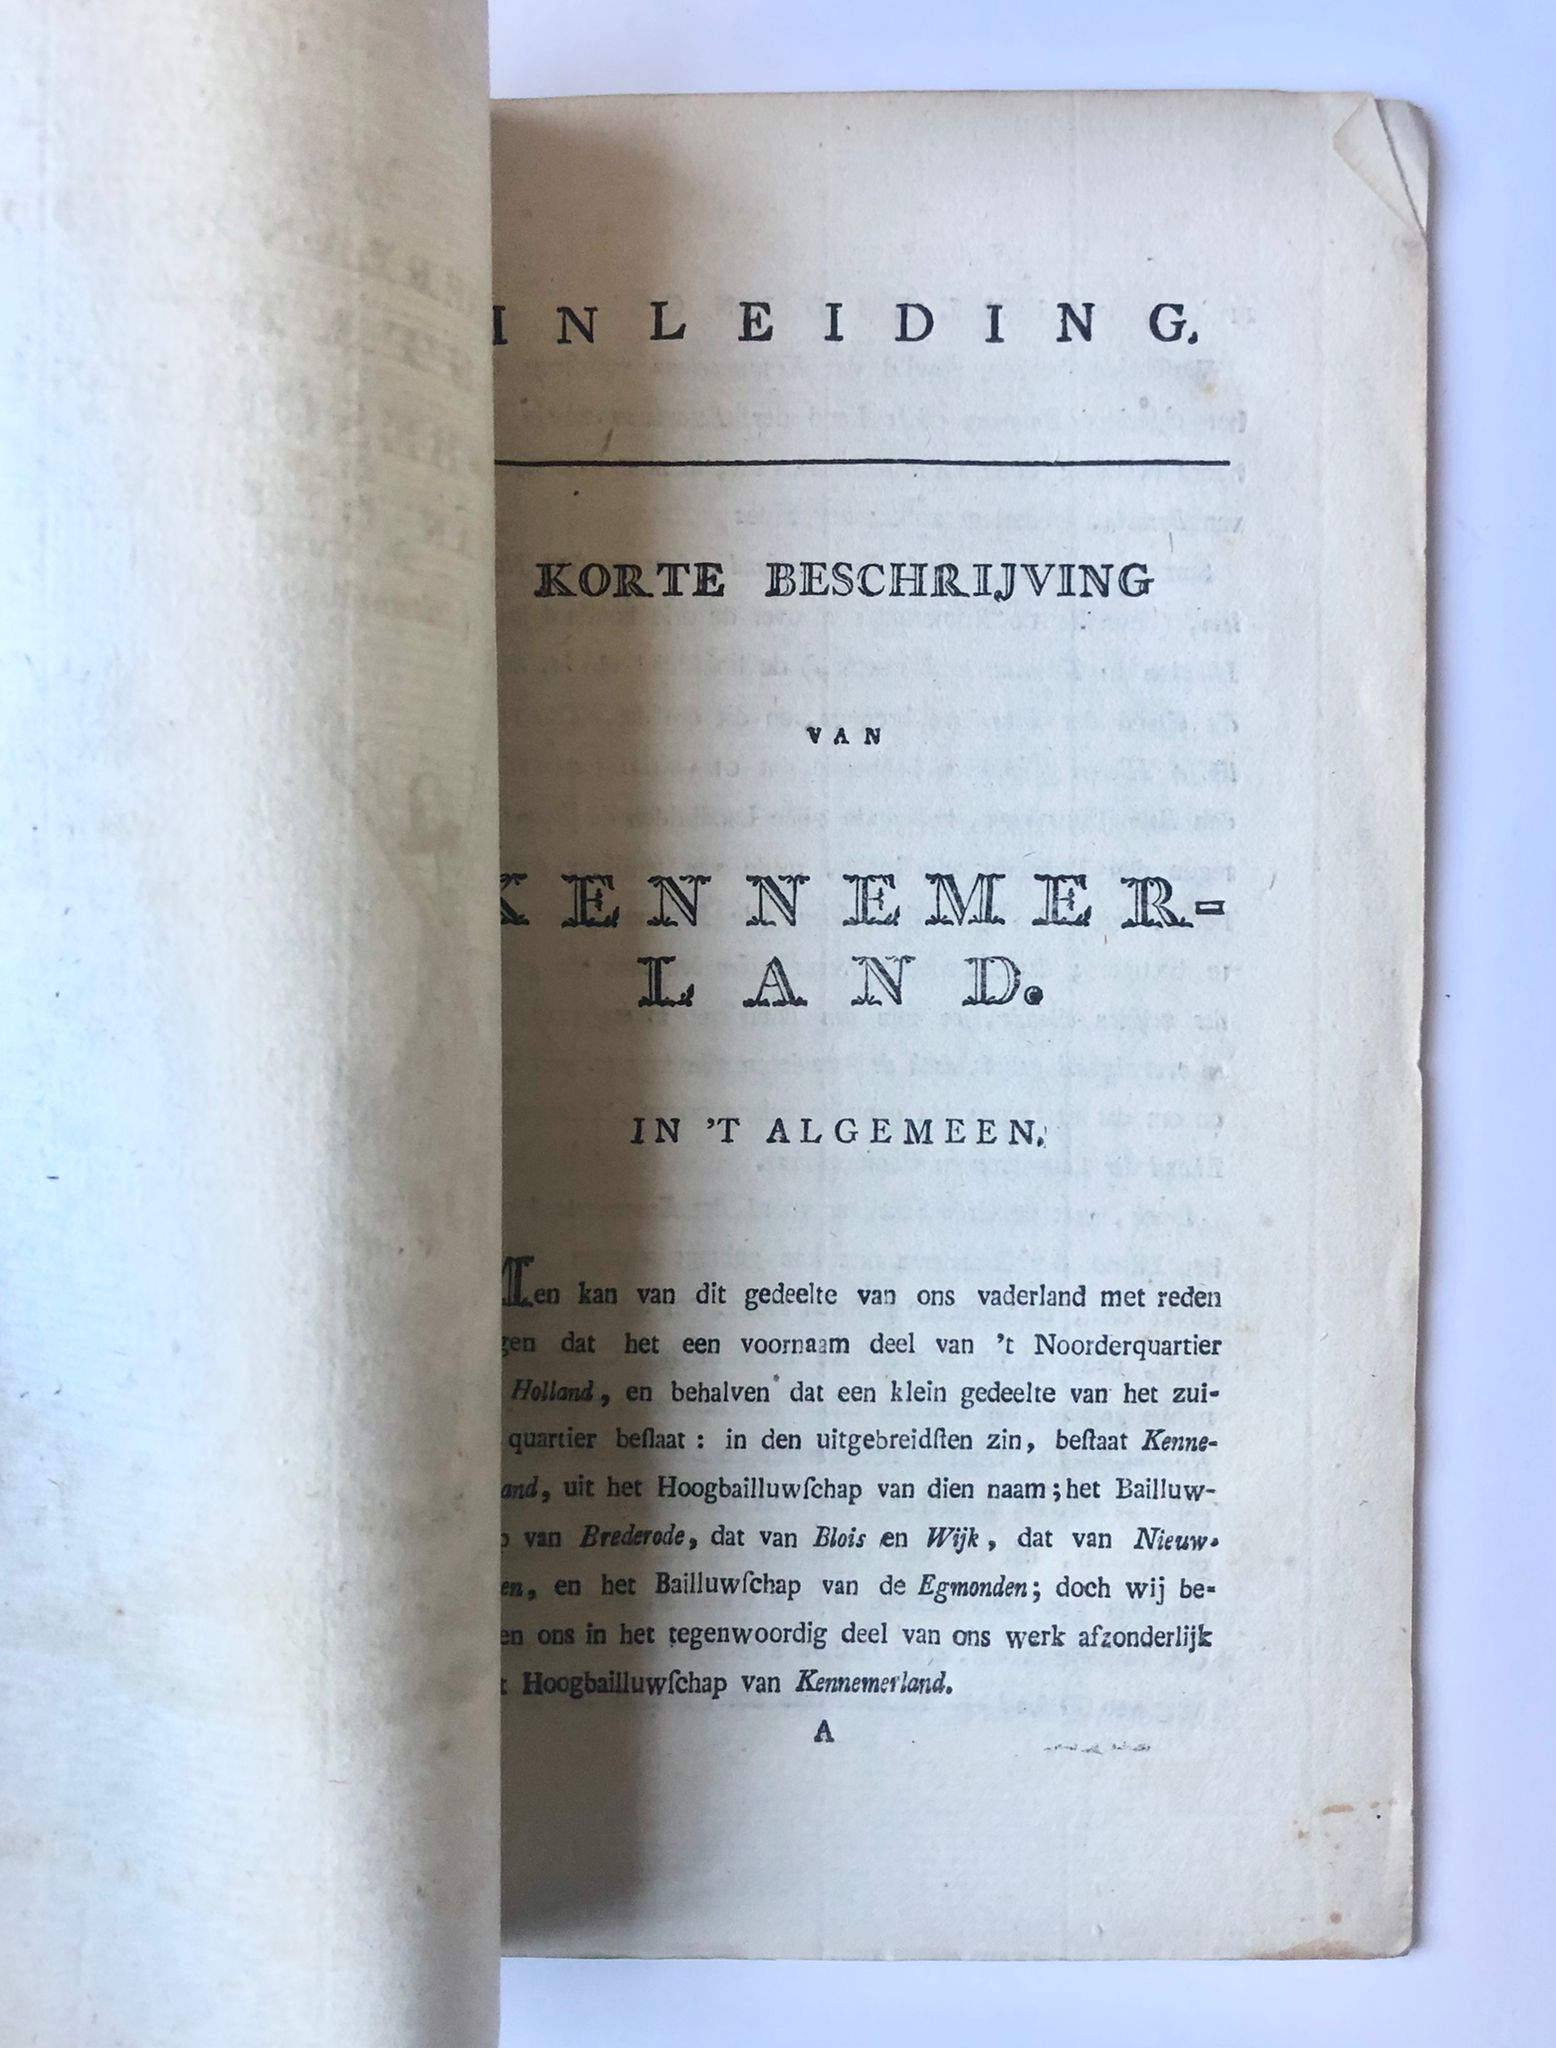 [Original edition Ollefen, Kennemerland 1796] De Nederlandsche Stad- en Dorps-beschrijver; door L. van Ollefen, IV. Deel, Kennemerland, Bij H. A. Banse, Amsterdam, 1796, 15 pp.